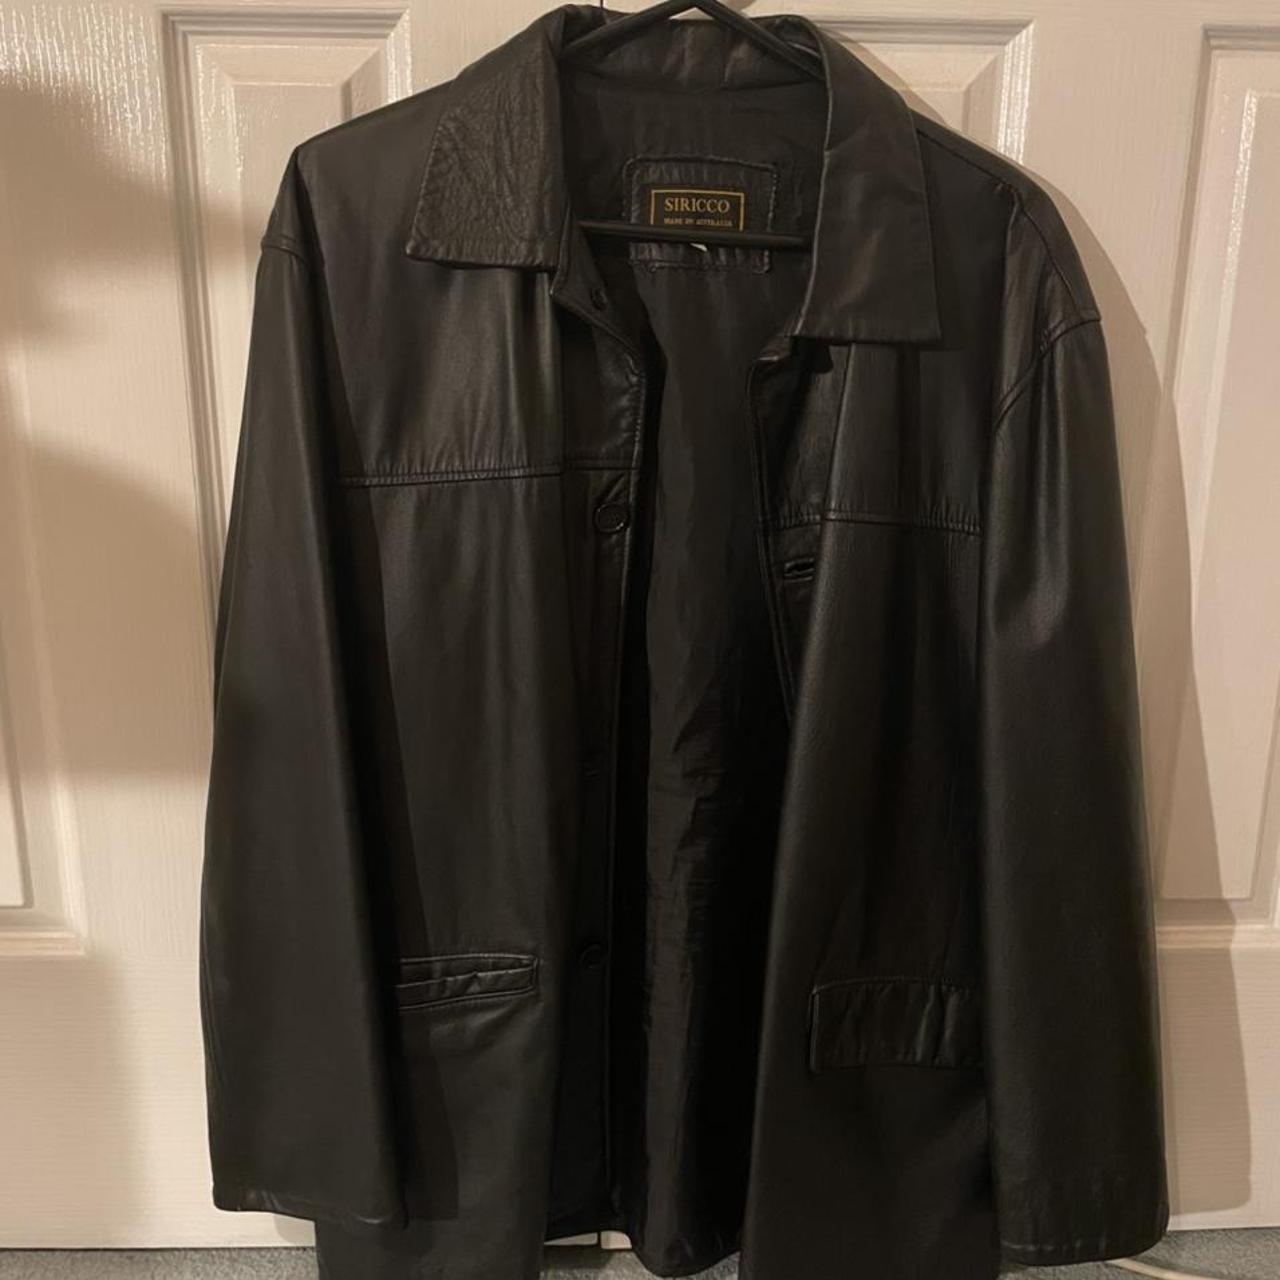 Vintage Sirocco leather jacket Size: Large Great... - Depop